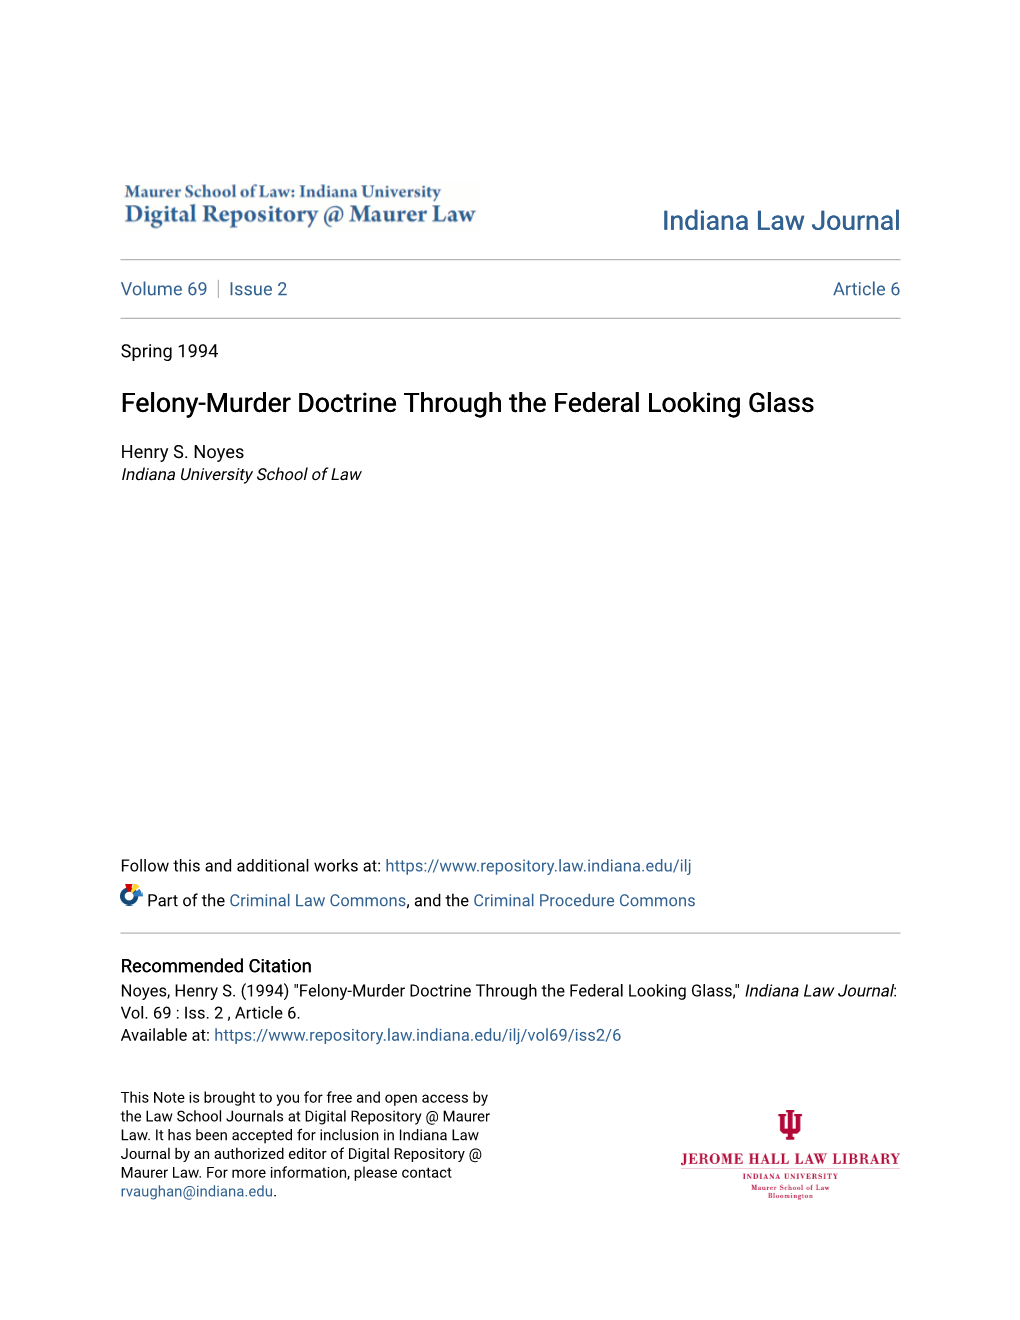 Felony-Murder Doctrine Through the Federal Looking Glass